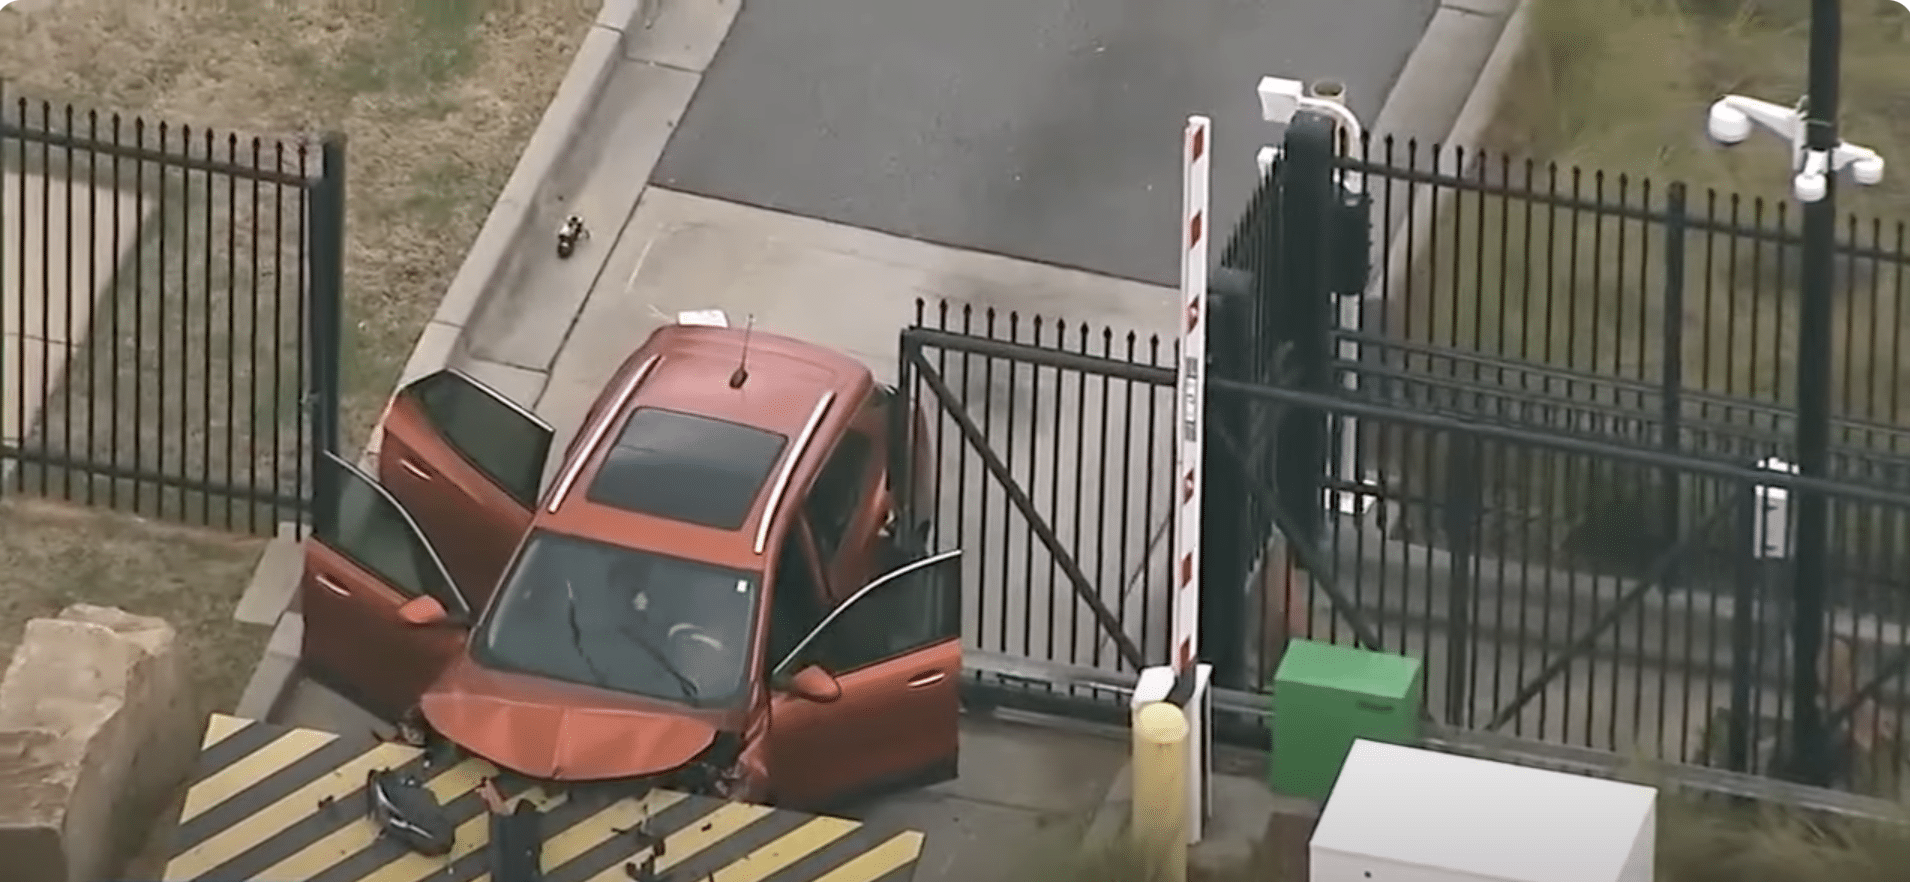 Man tries to breach FBI office in Atlanta, Rams vehicle into gate